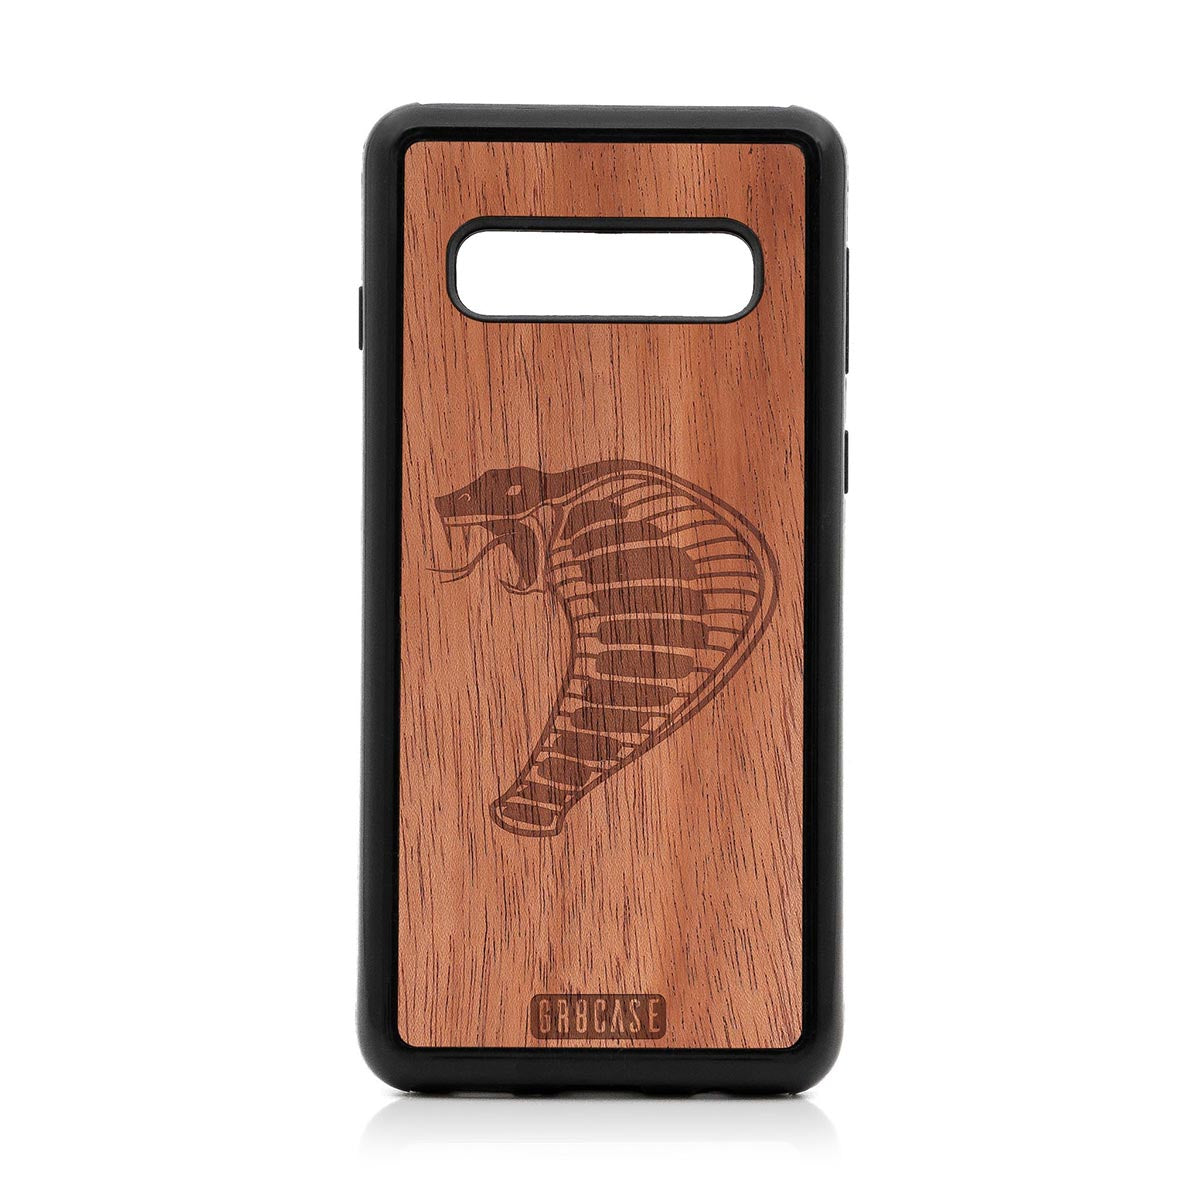 Cobra Design Wood Case For Samsung Galaxy S10 by GR8CASE